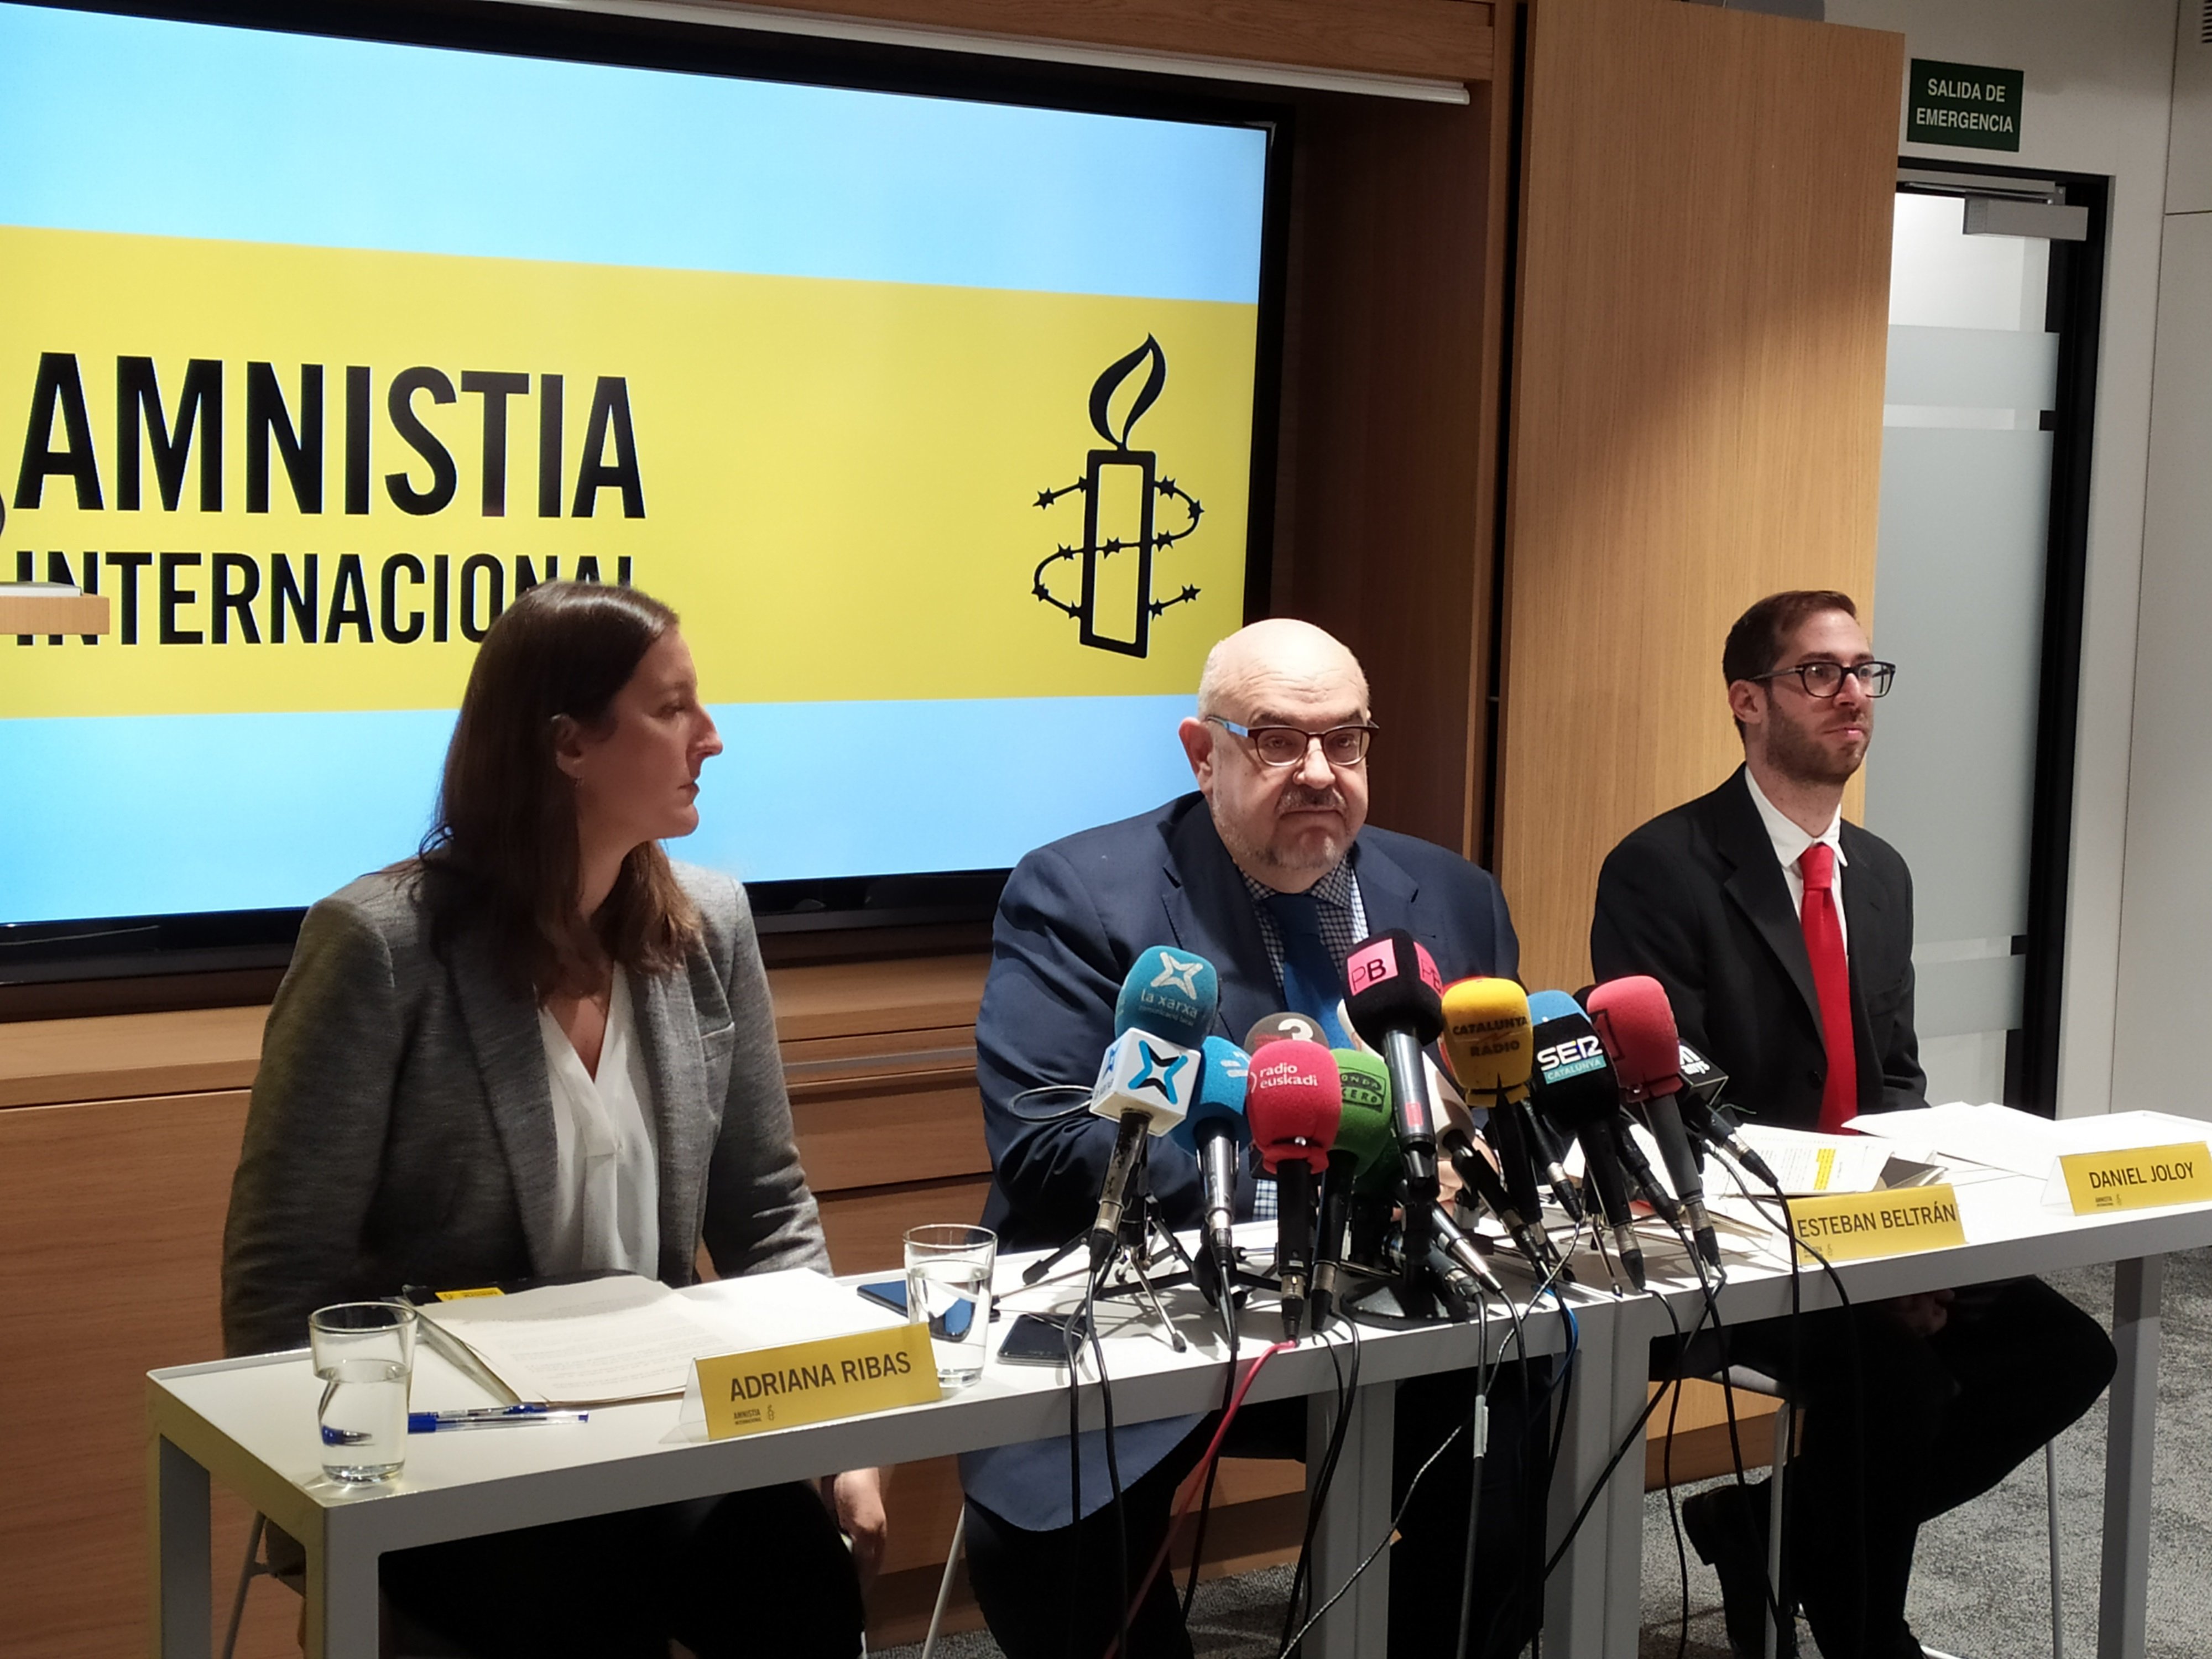 Amnesty International: Catalan trial's "dangerous interpretation" of law "threatens rights"